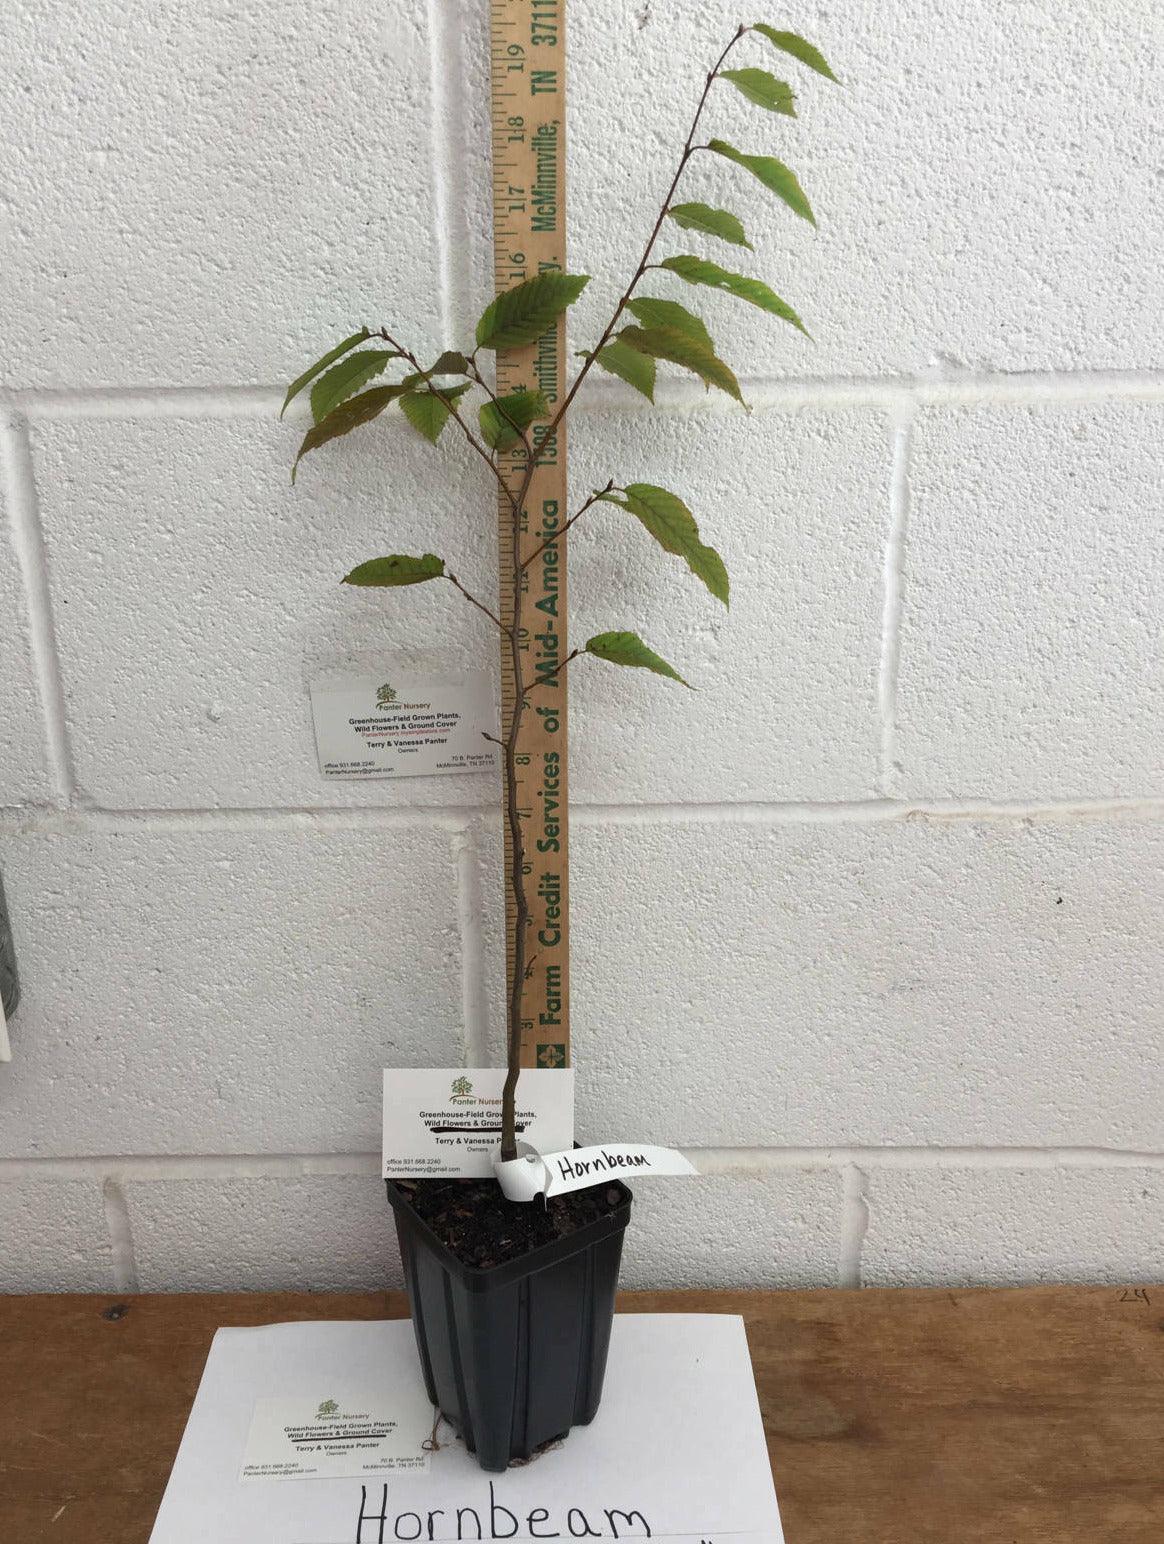 2 American Hornbeam Trees - 6-12" Tall Seedlings - Live Plants - Quart Pots - Carpinus caroliniana - The Nursery Center